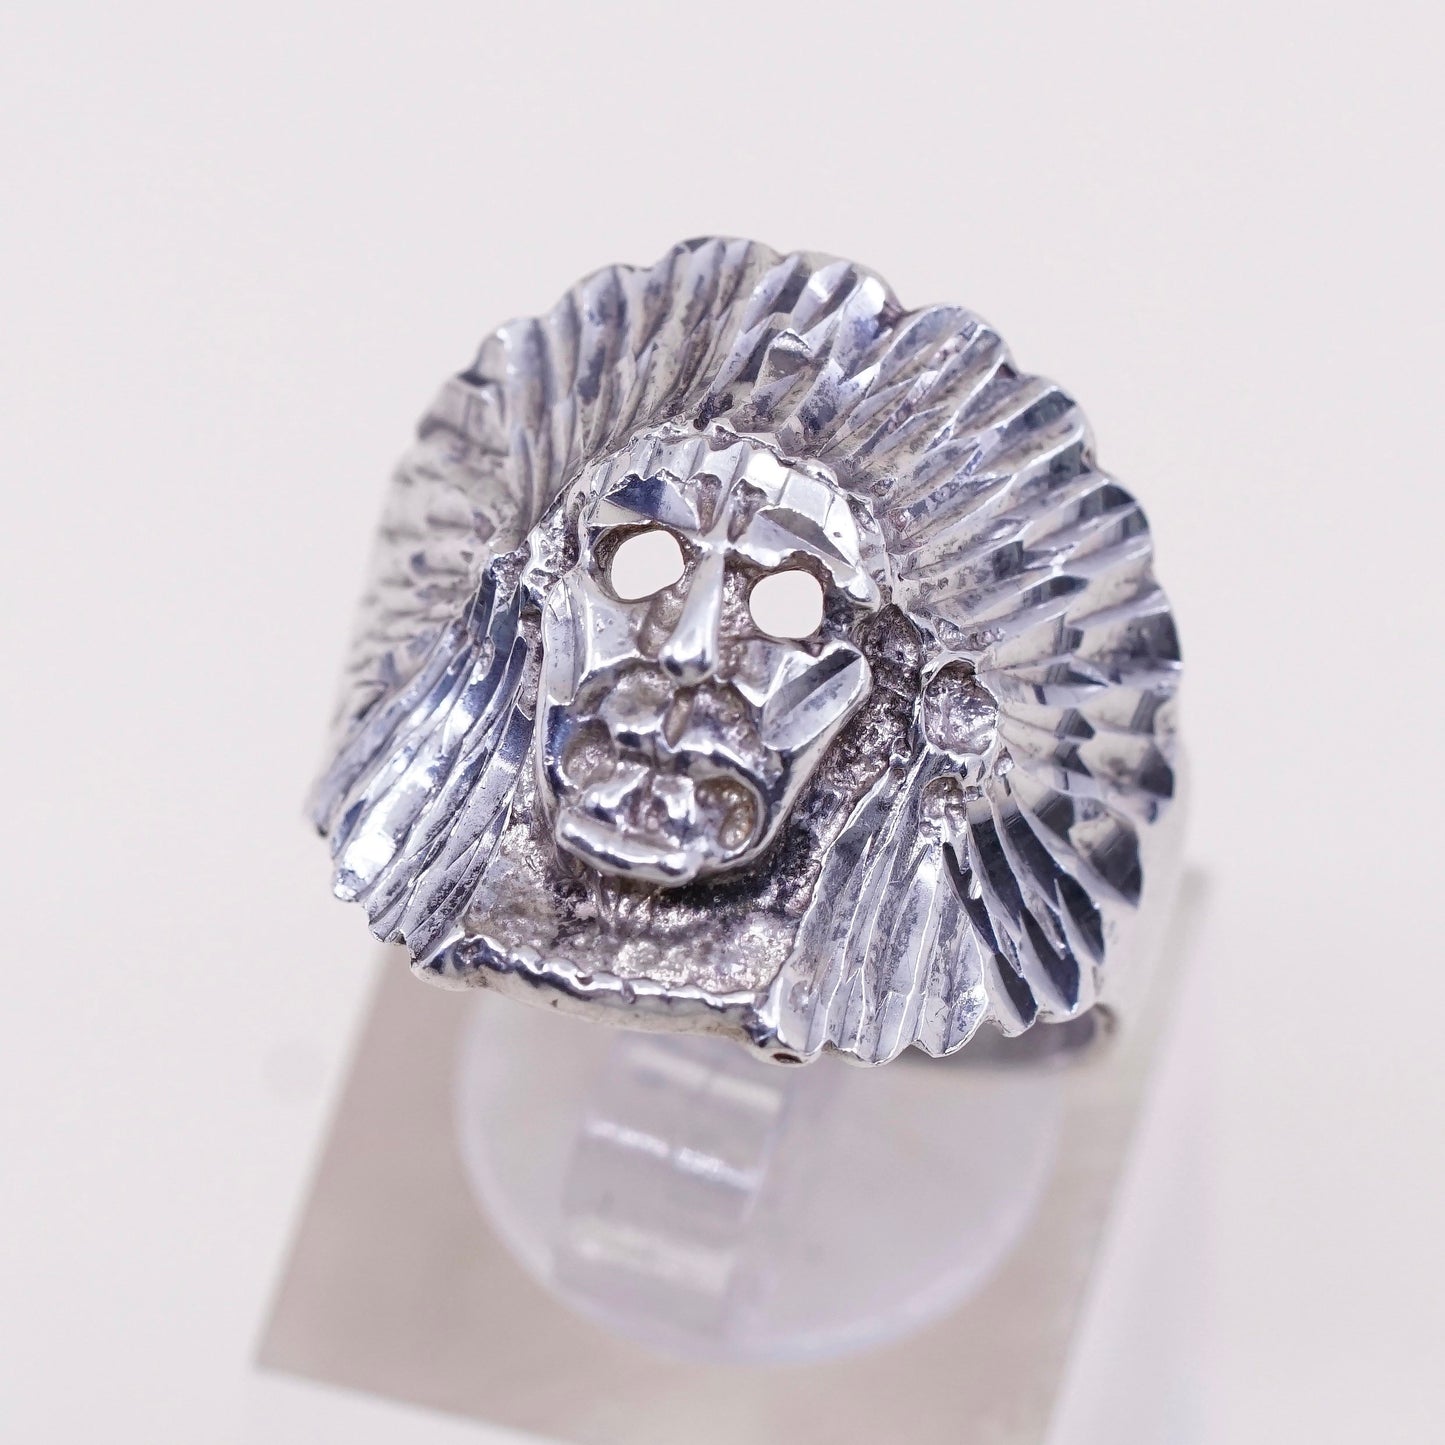 sz 9.25, Native American Sterling silver handmade ring, 925 figurehead band